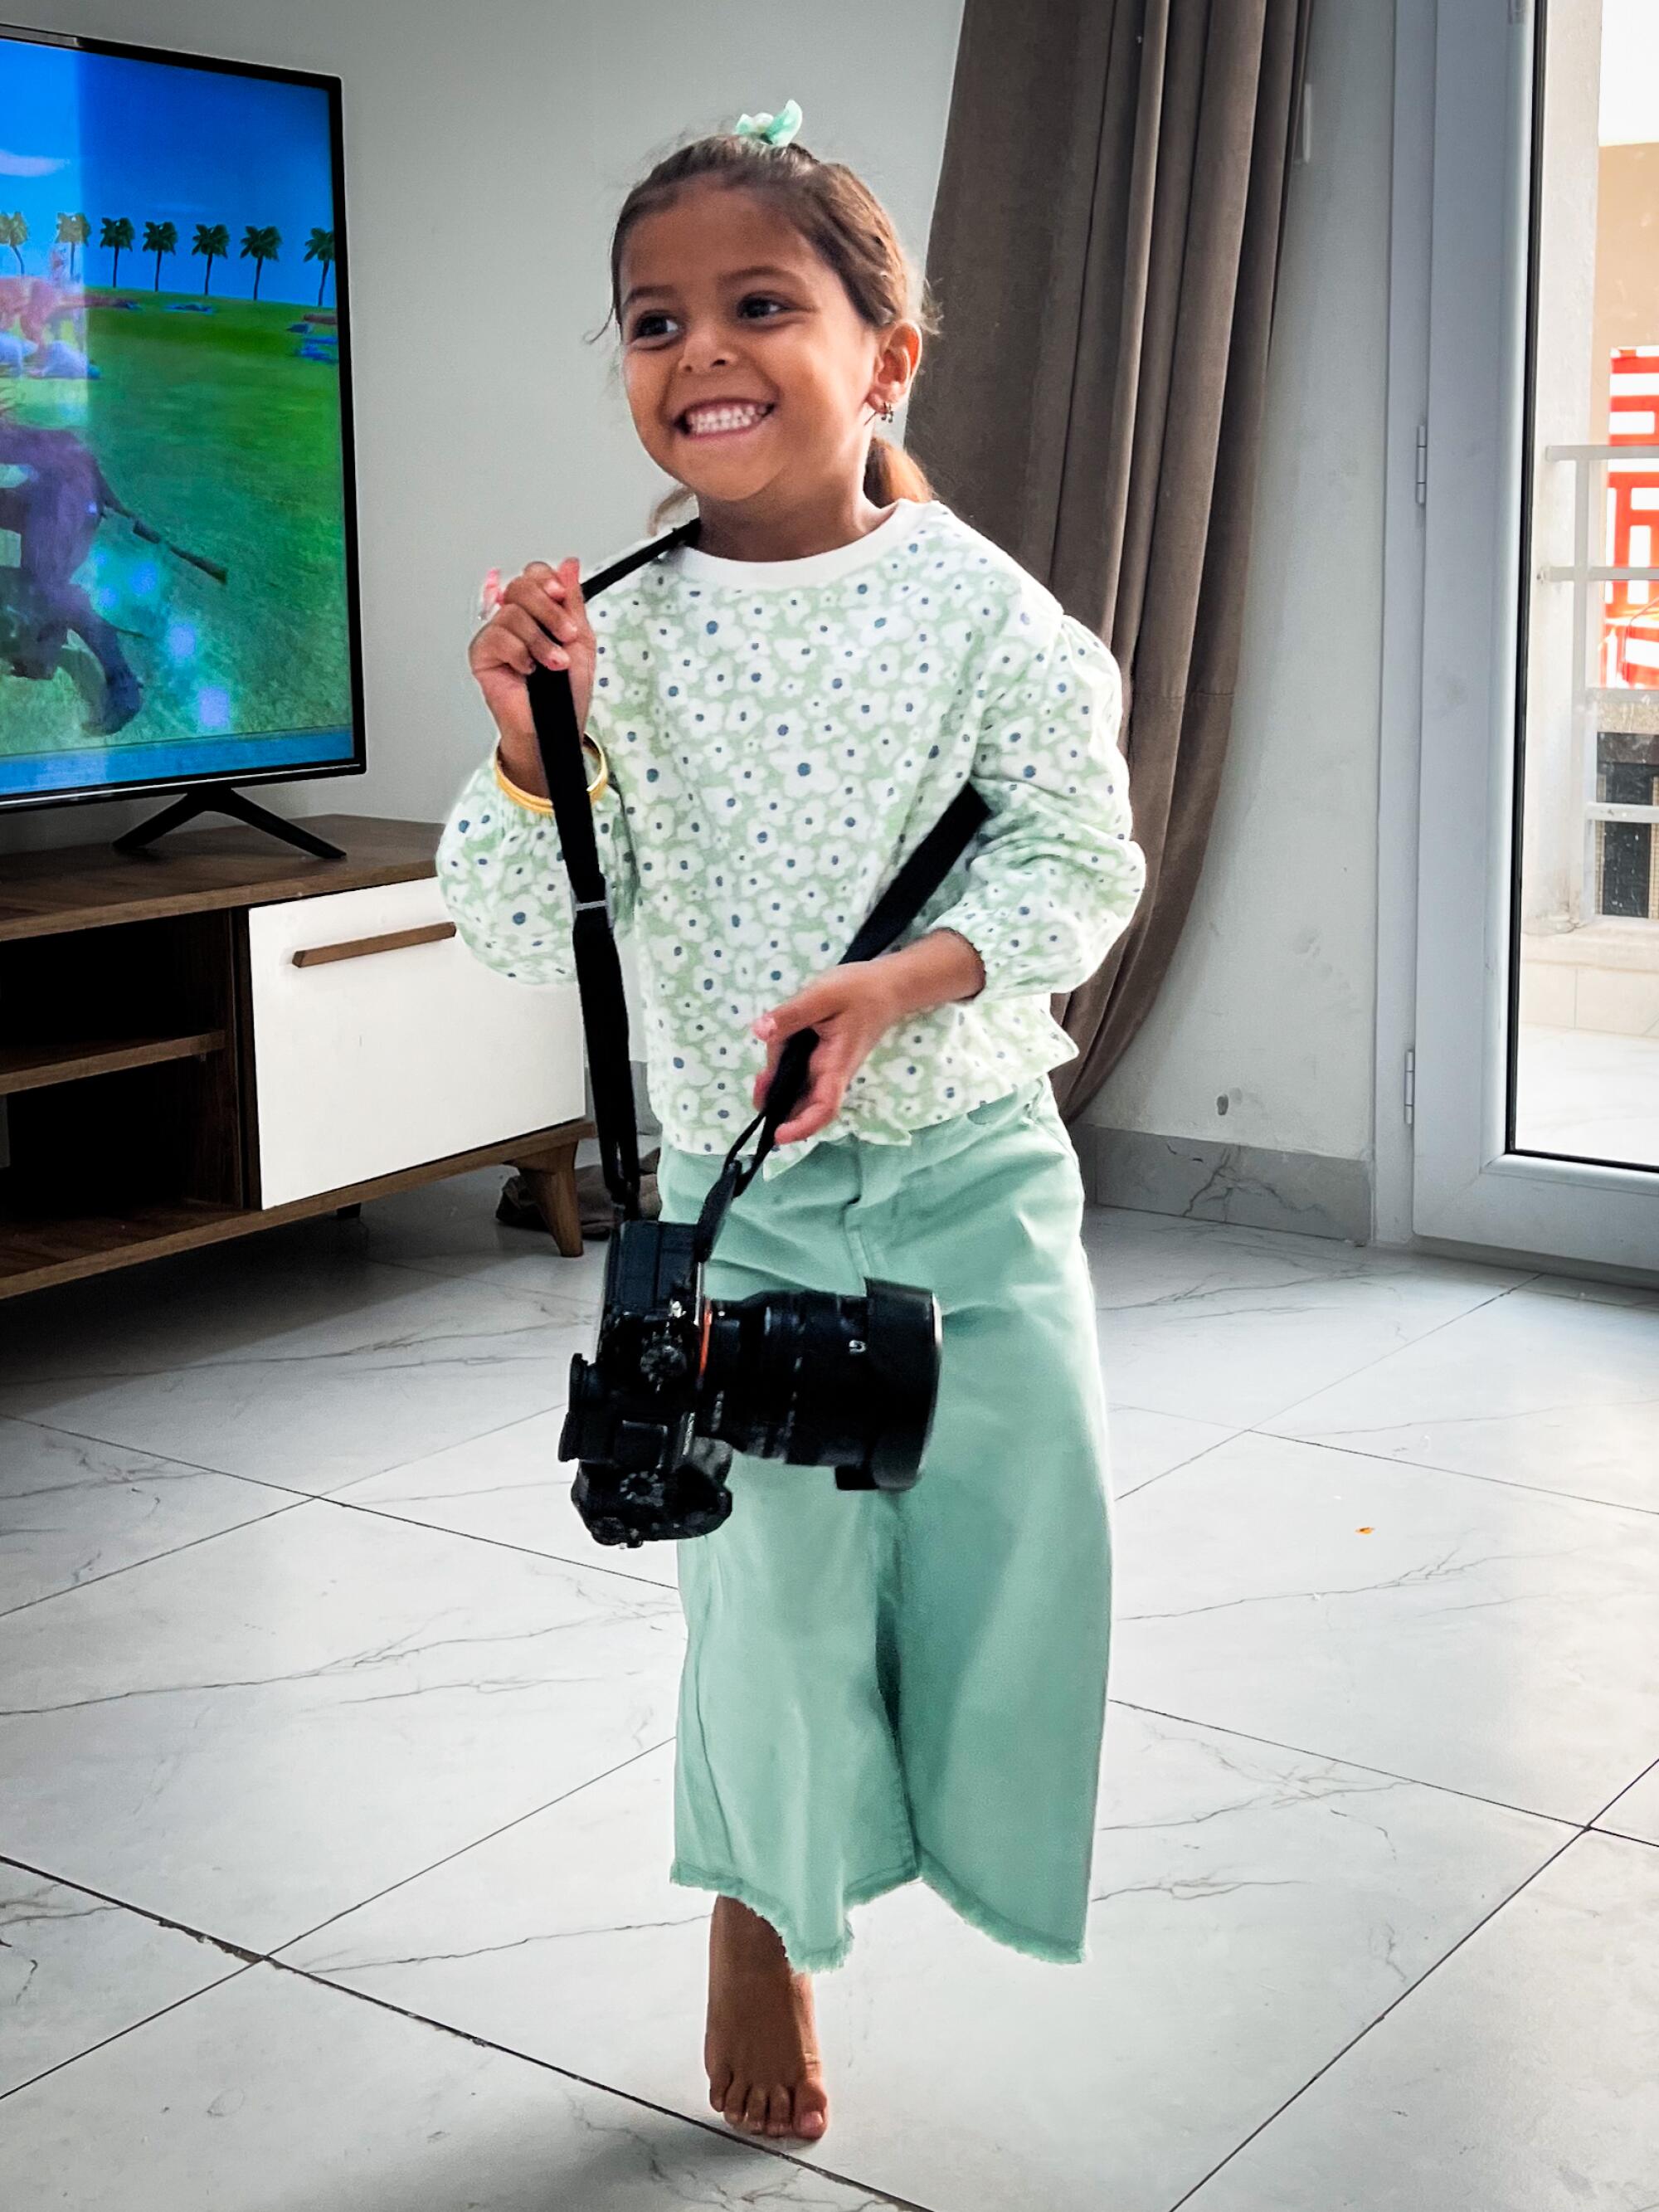 Fatma Nabhan, 5, plays with a camera. 